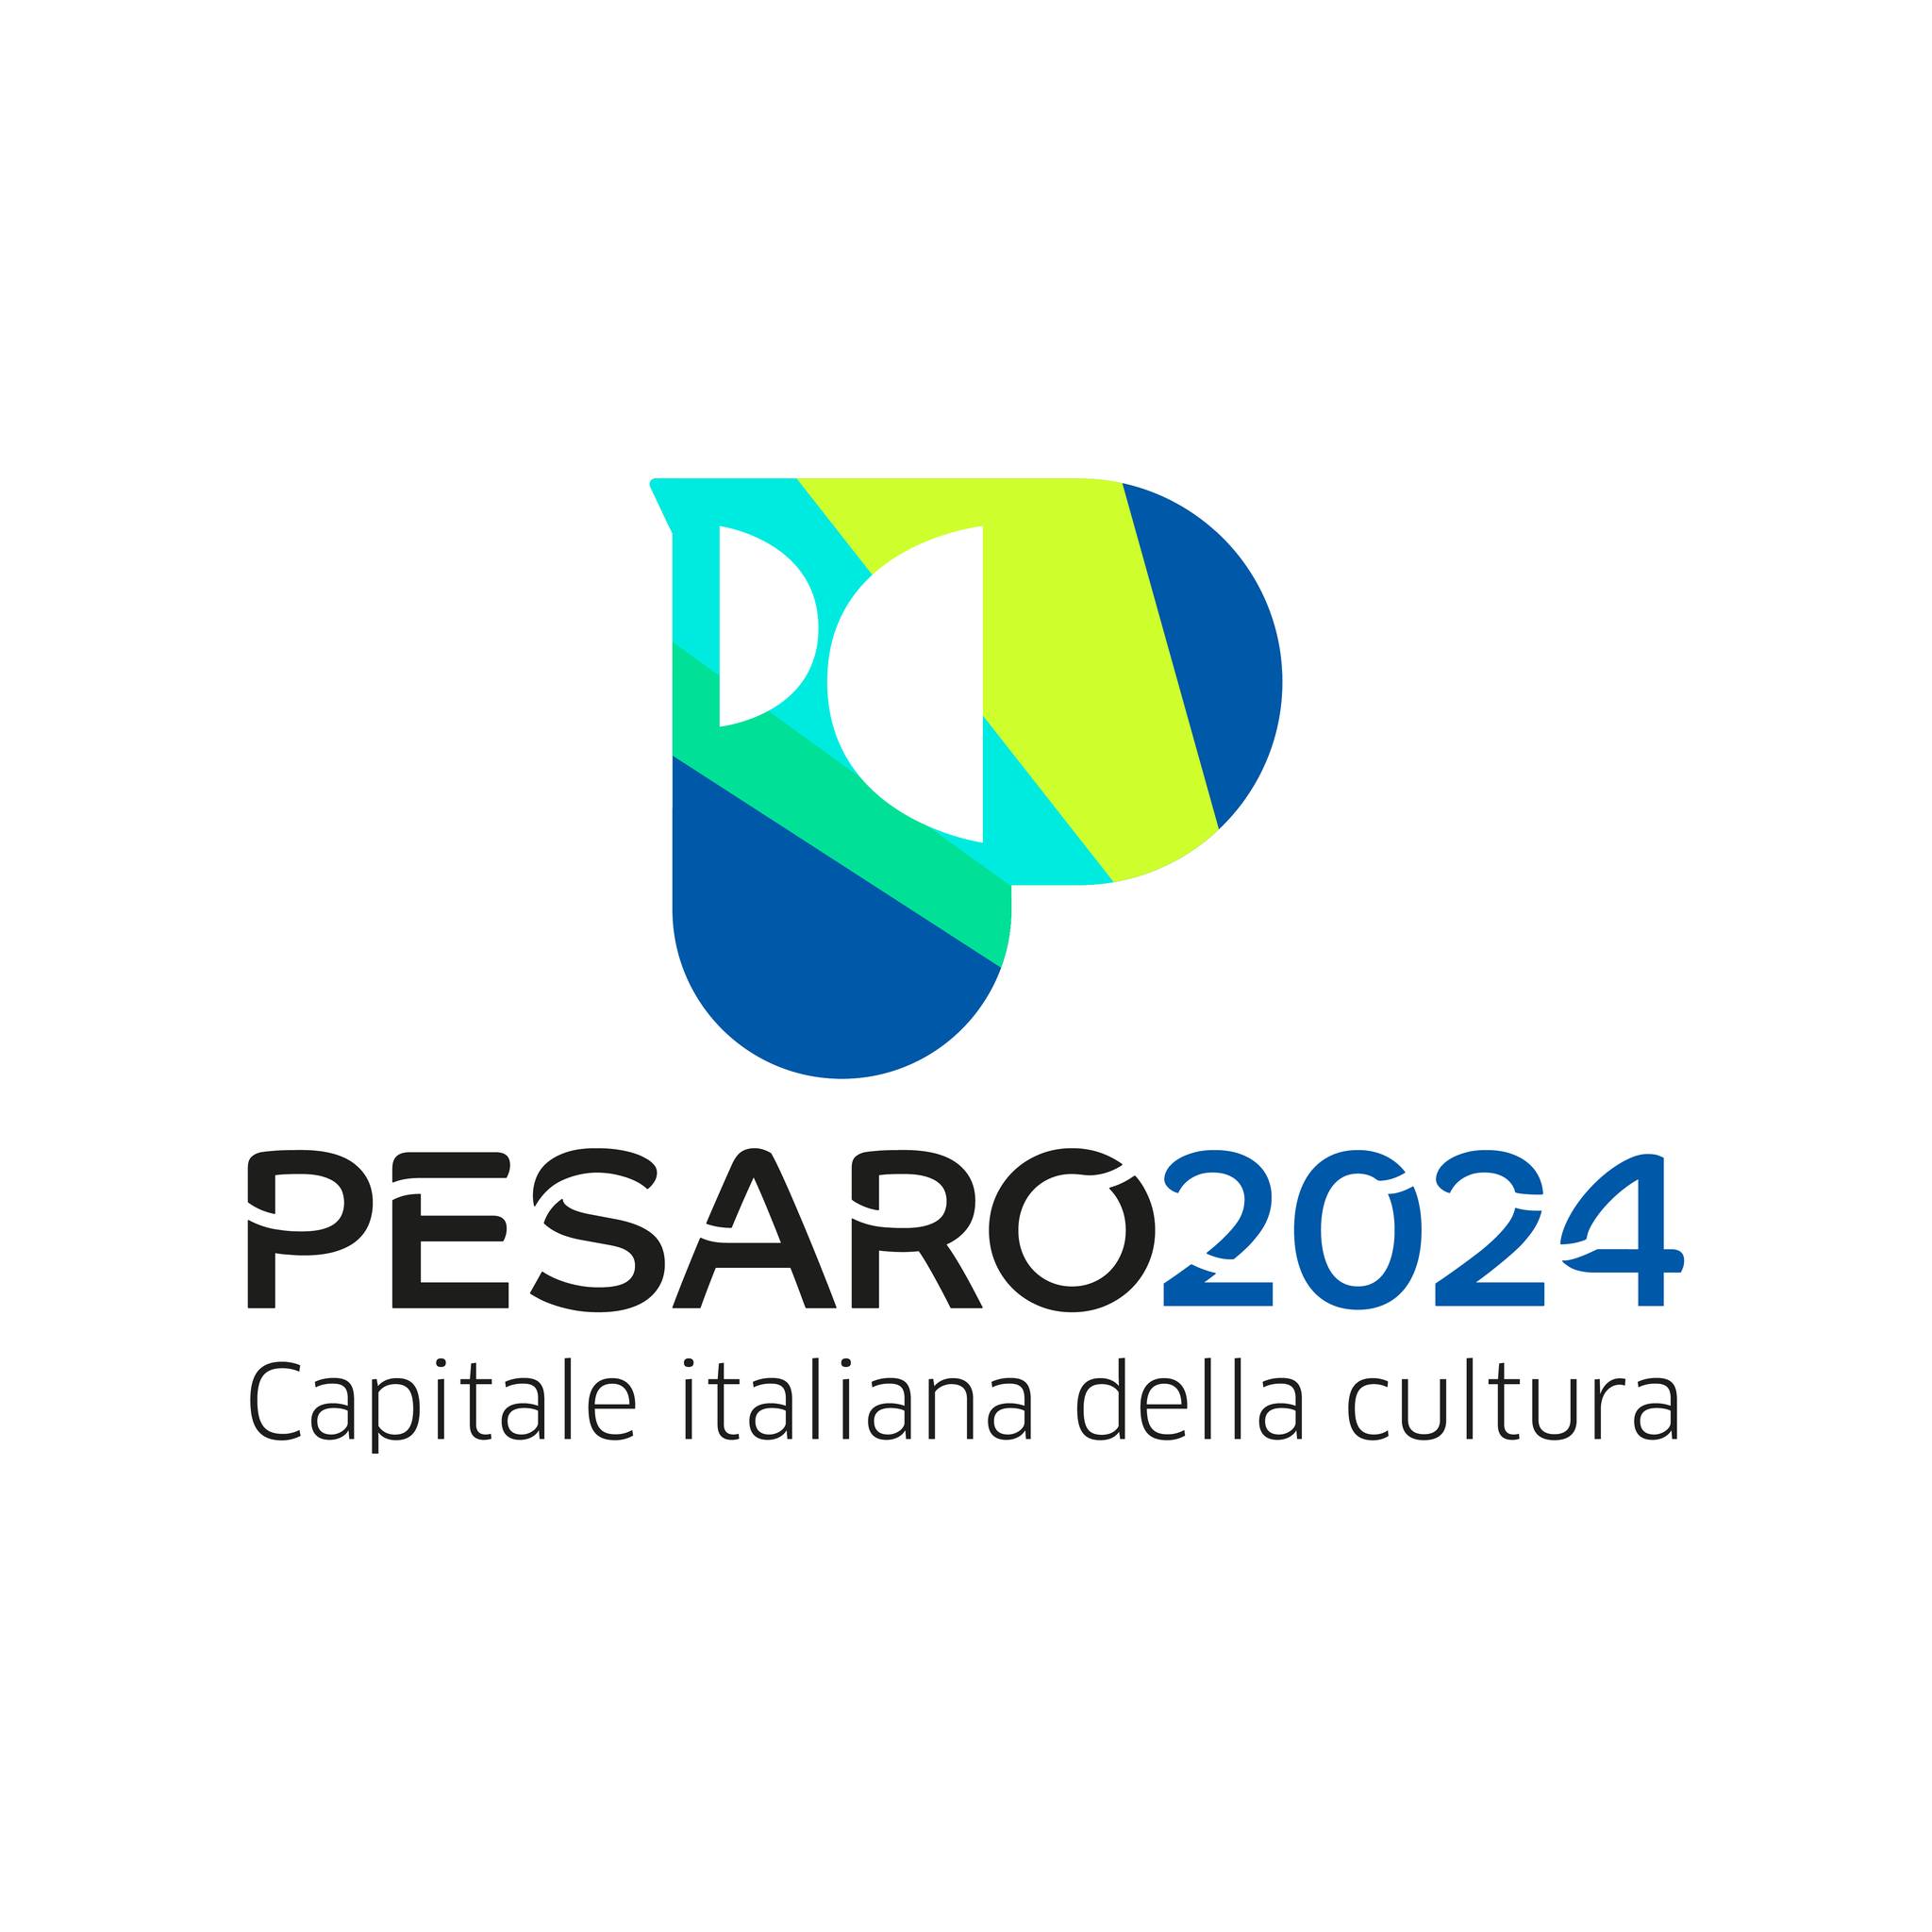 Pesaro capital of culture